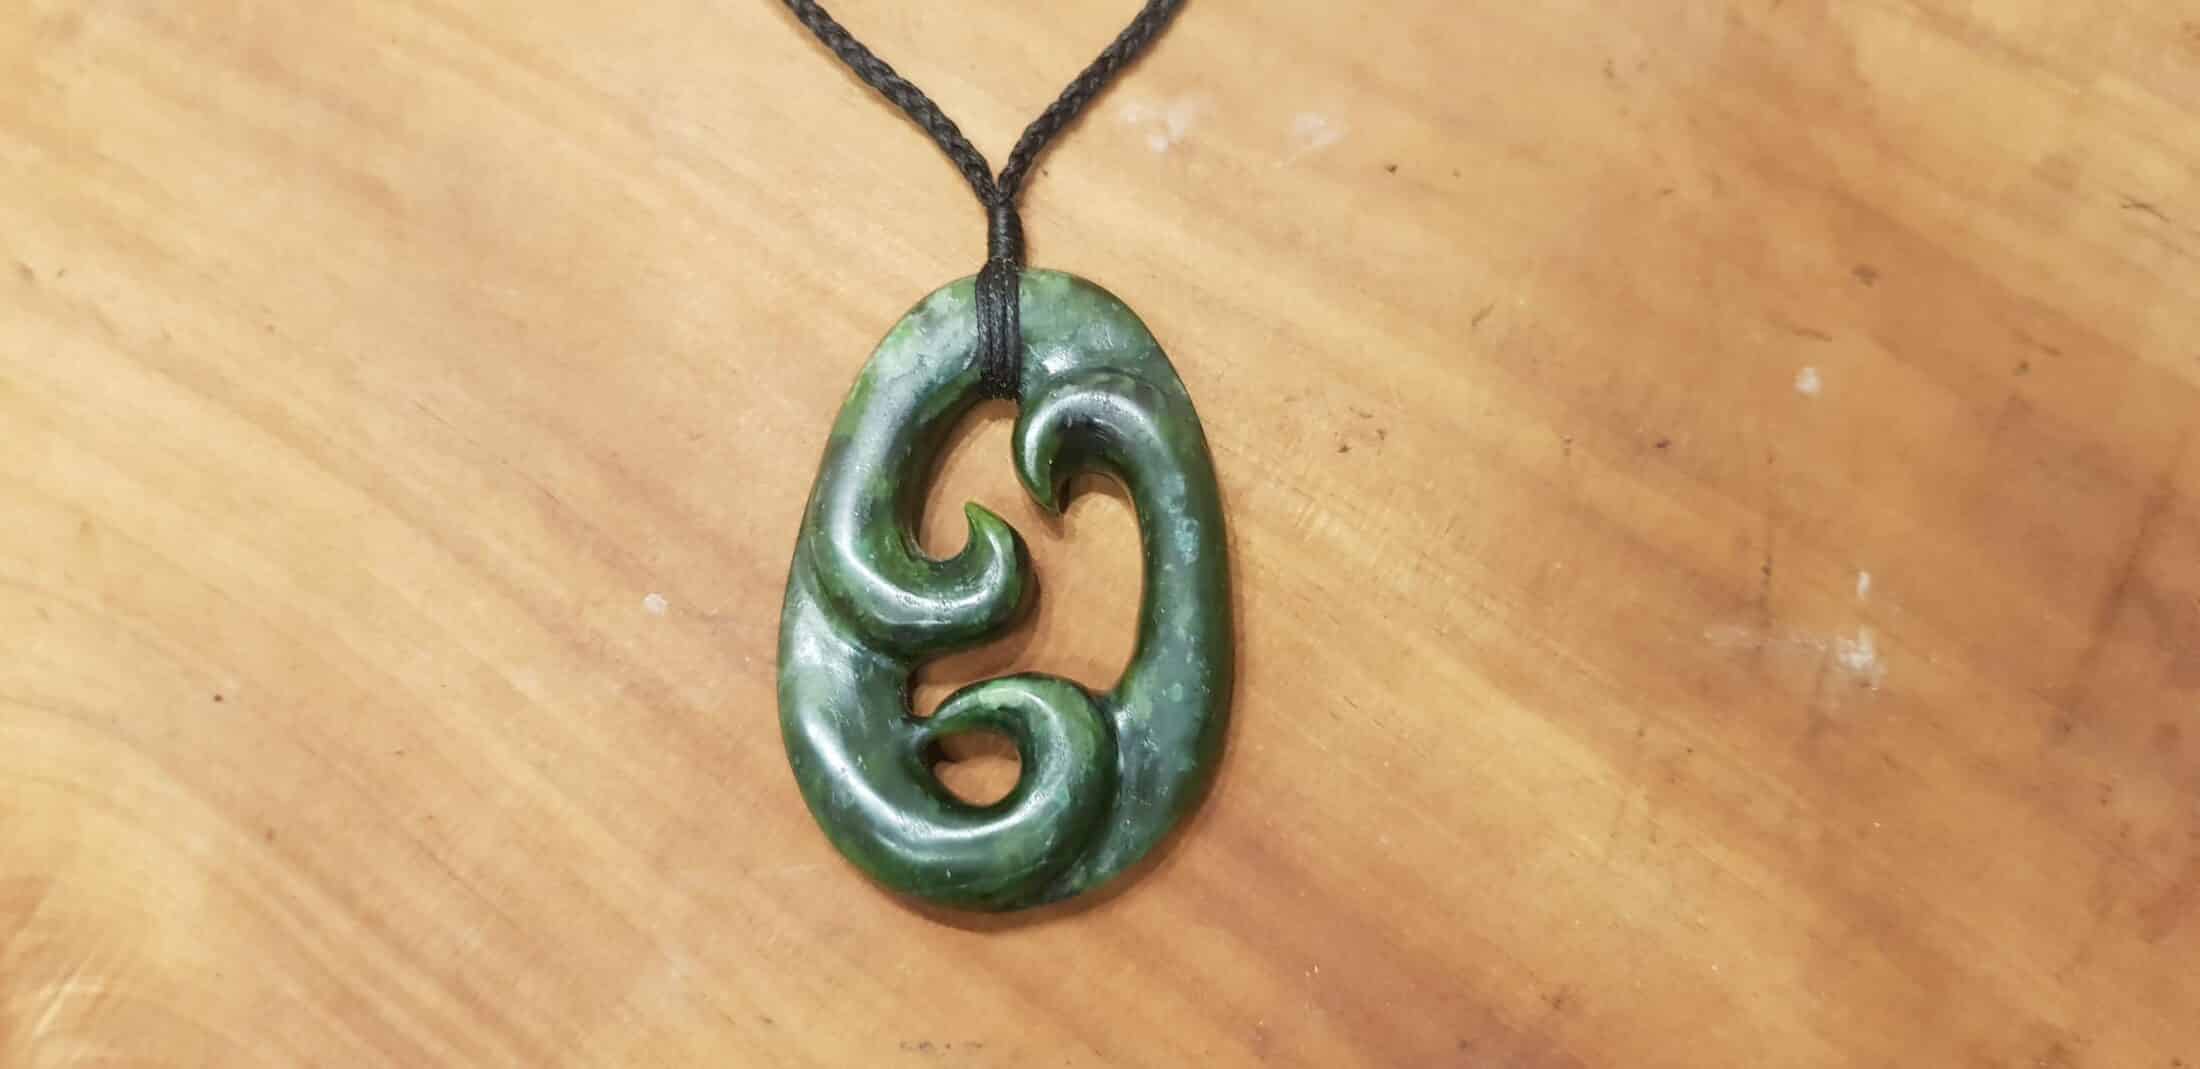 kete ō taonga , pounamu, nz, aotearoa, campbell carving, pendant, necklace, greenstone, carve, carving, carver